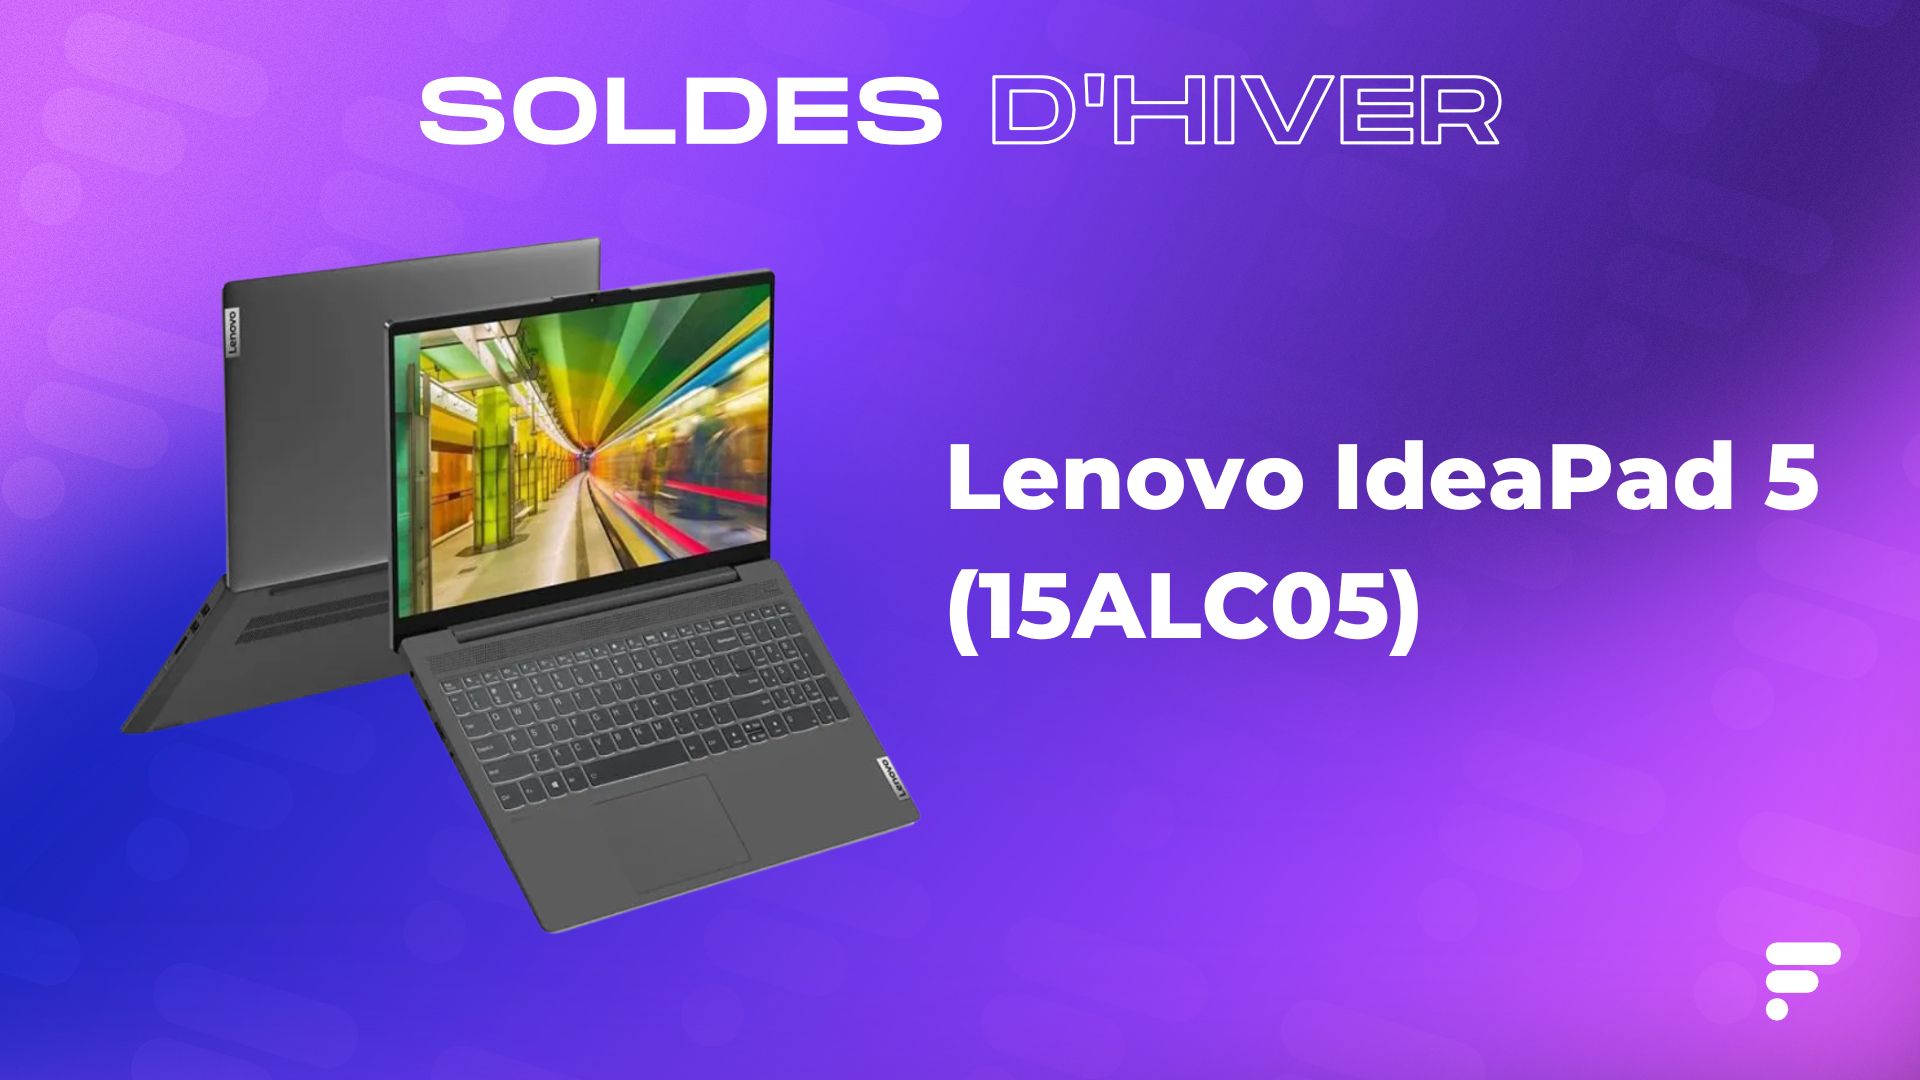 Bon plan : un PC portable Lenovo 15 pouces à moins de 400 euros